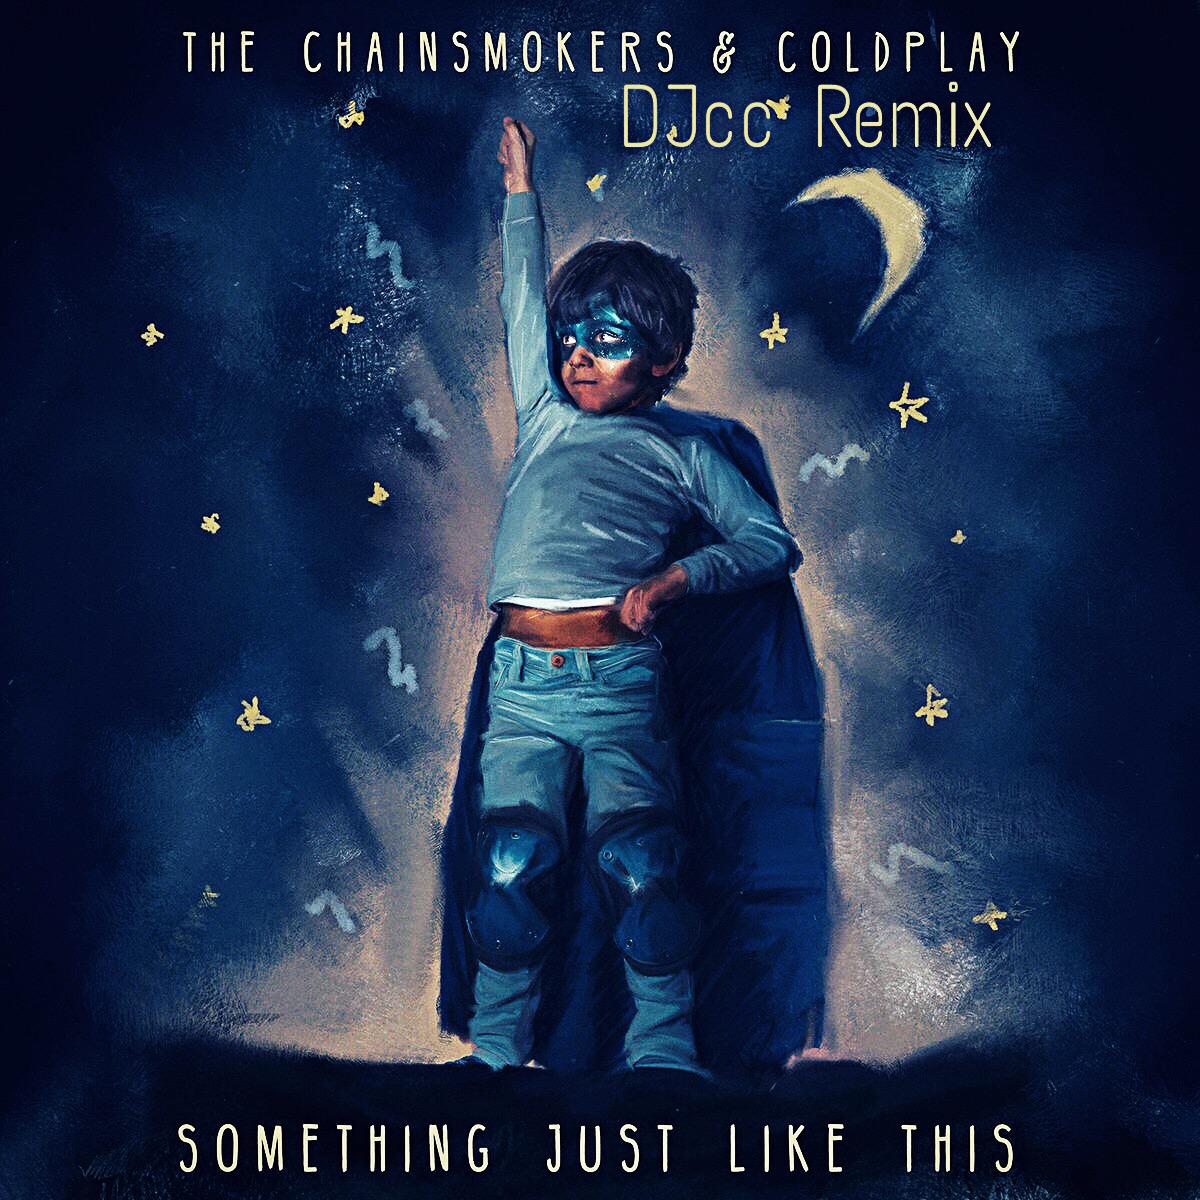 ainsmokers \/ Coldplay - Somethingjustlikethis(D